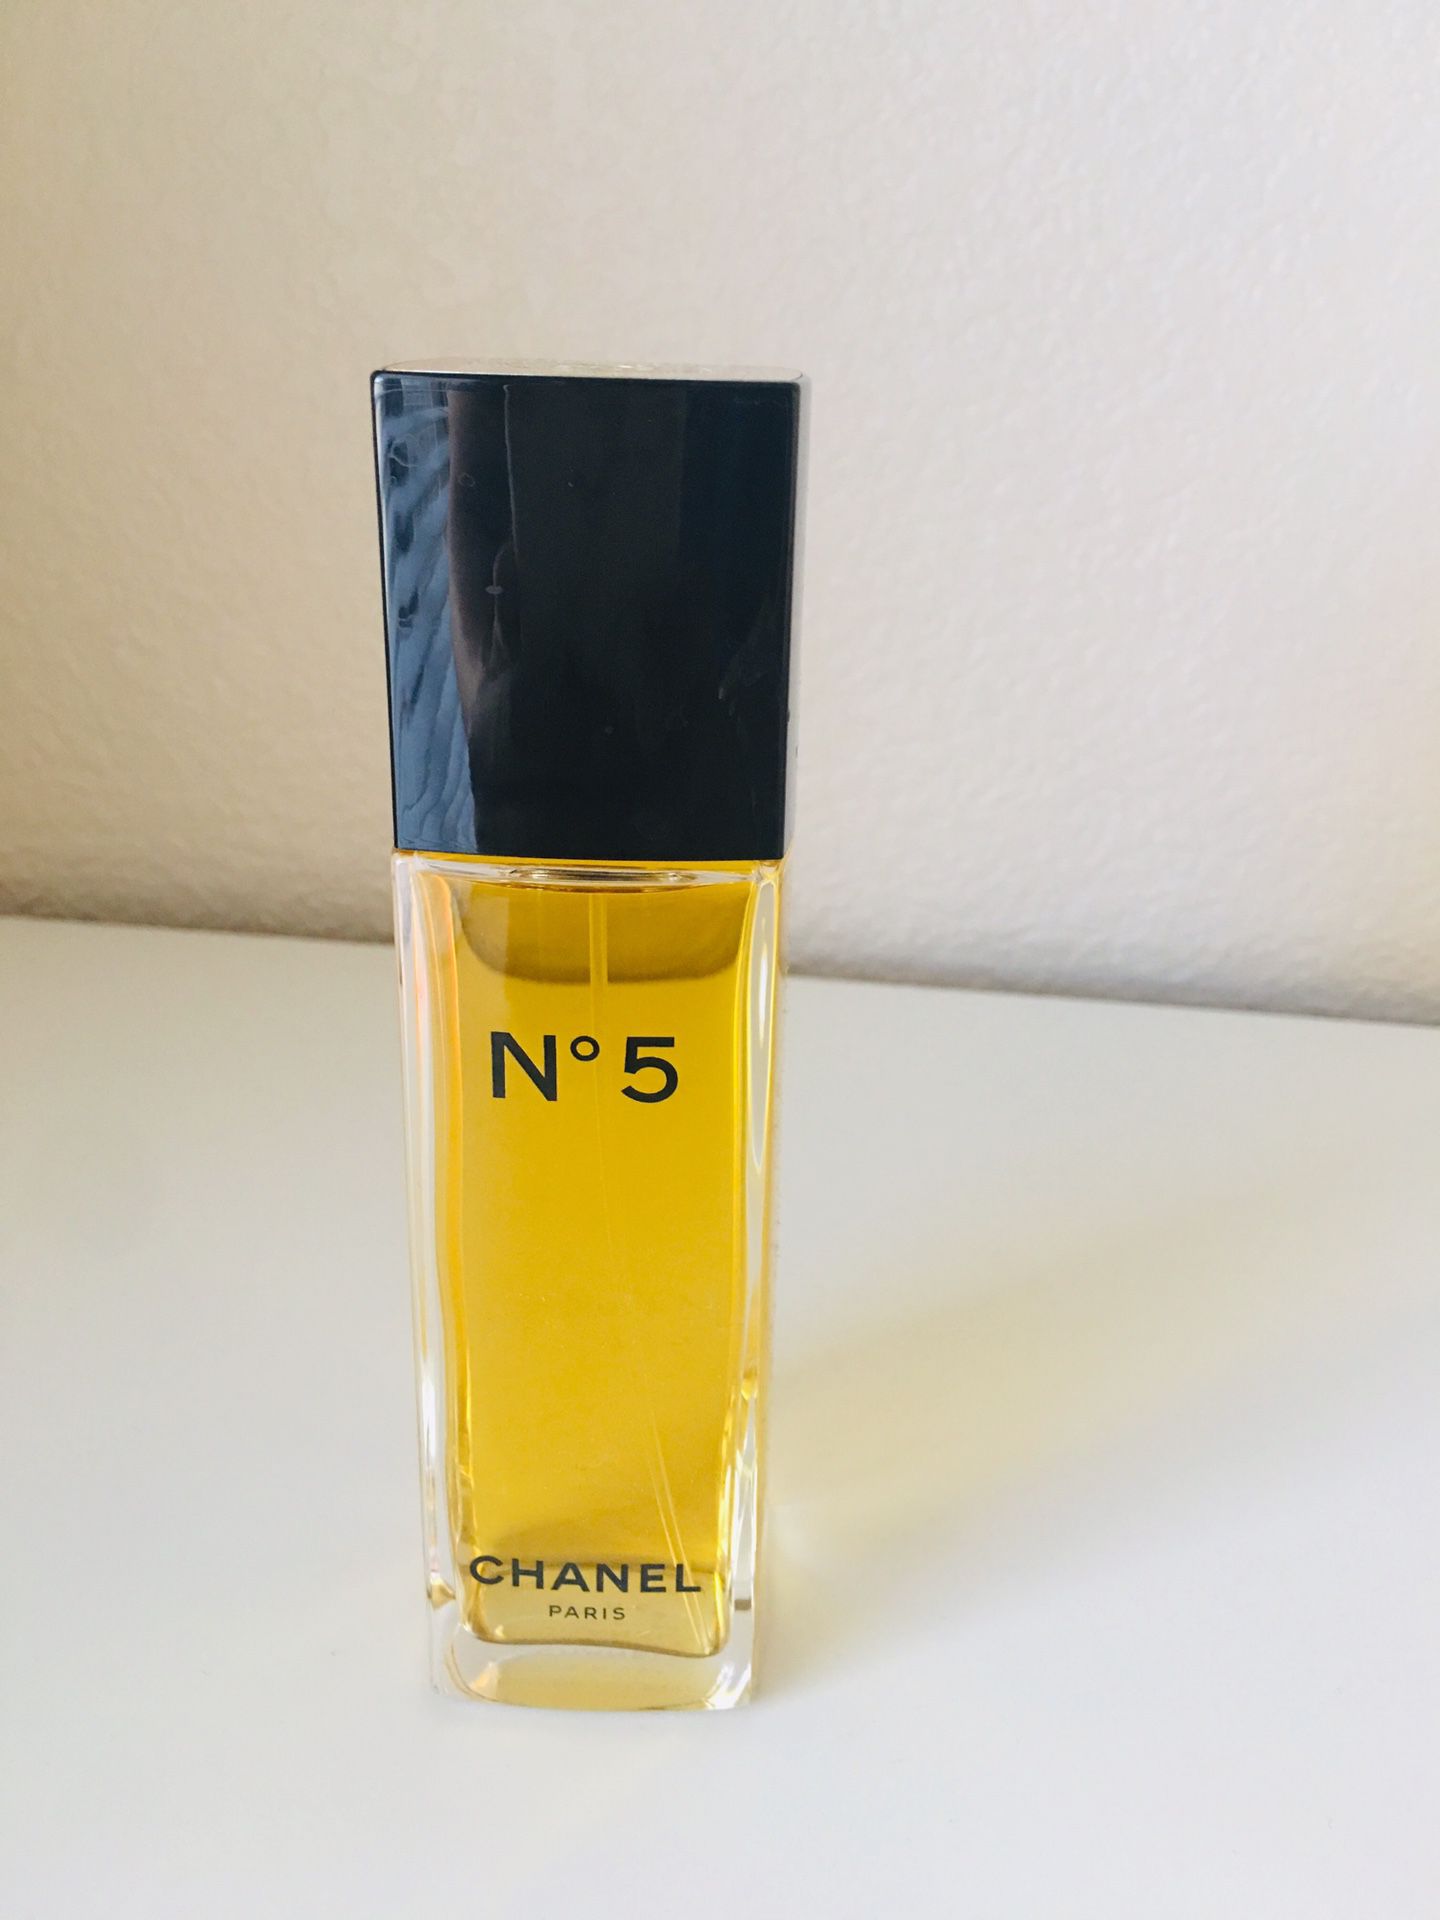 Chanel N 5 Paris Perfume - never used